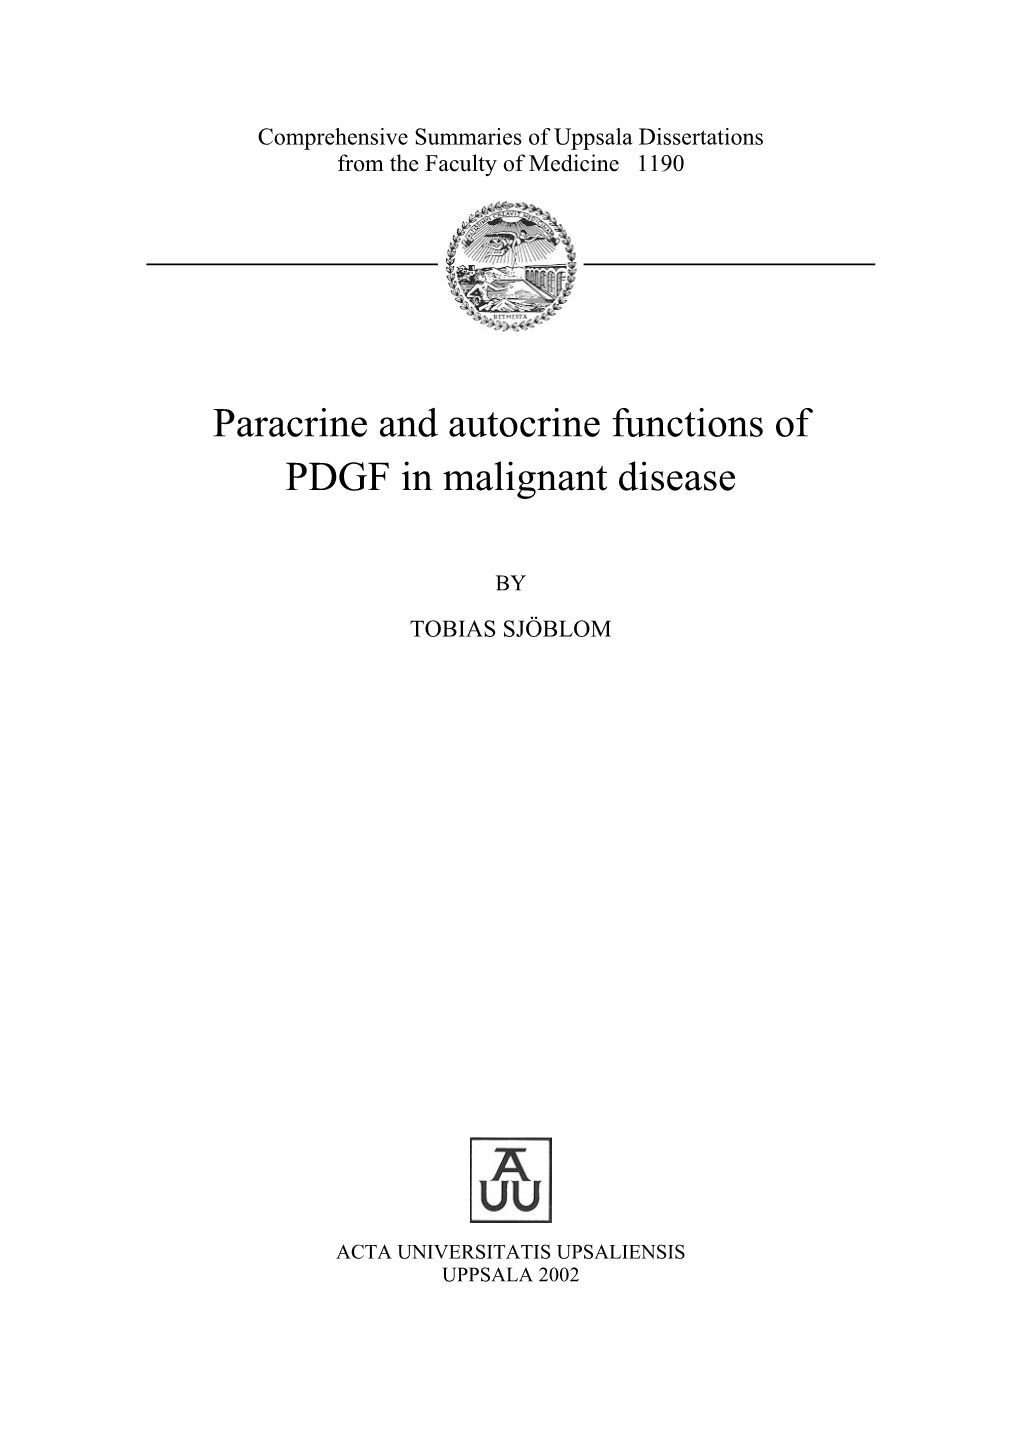 Paracrine and Autocrine Functions of PDGF in Malignant Disease